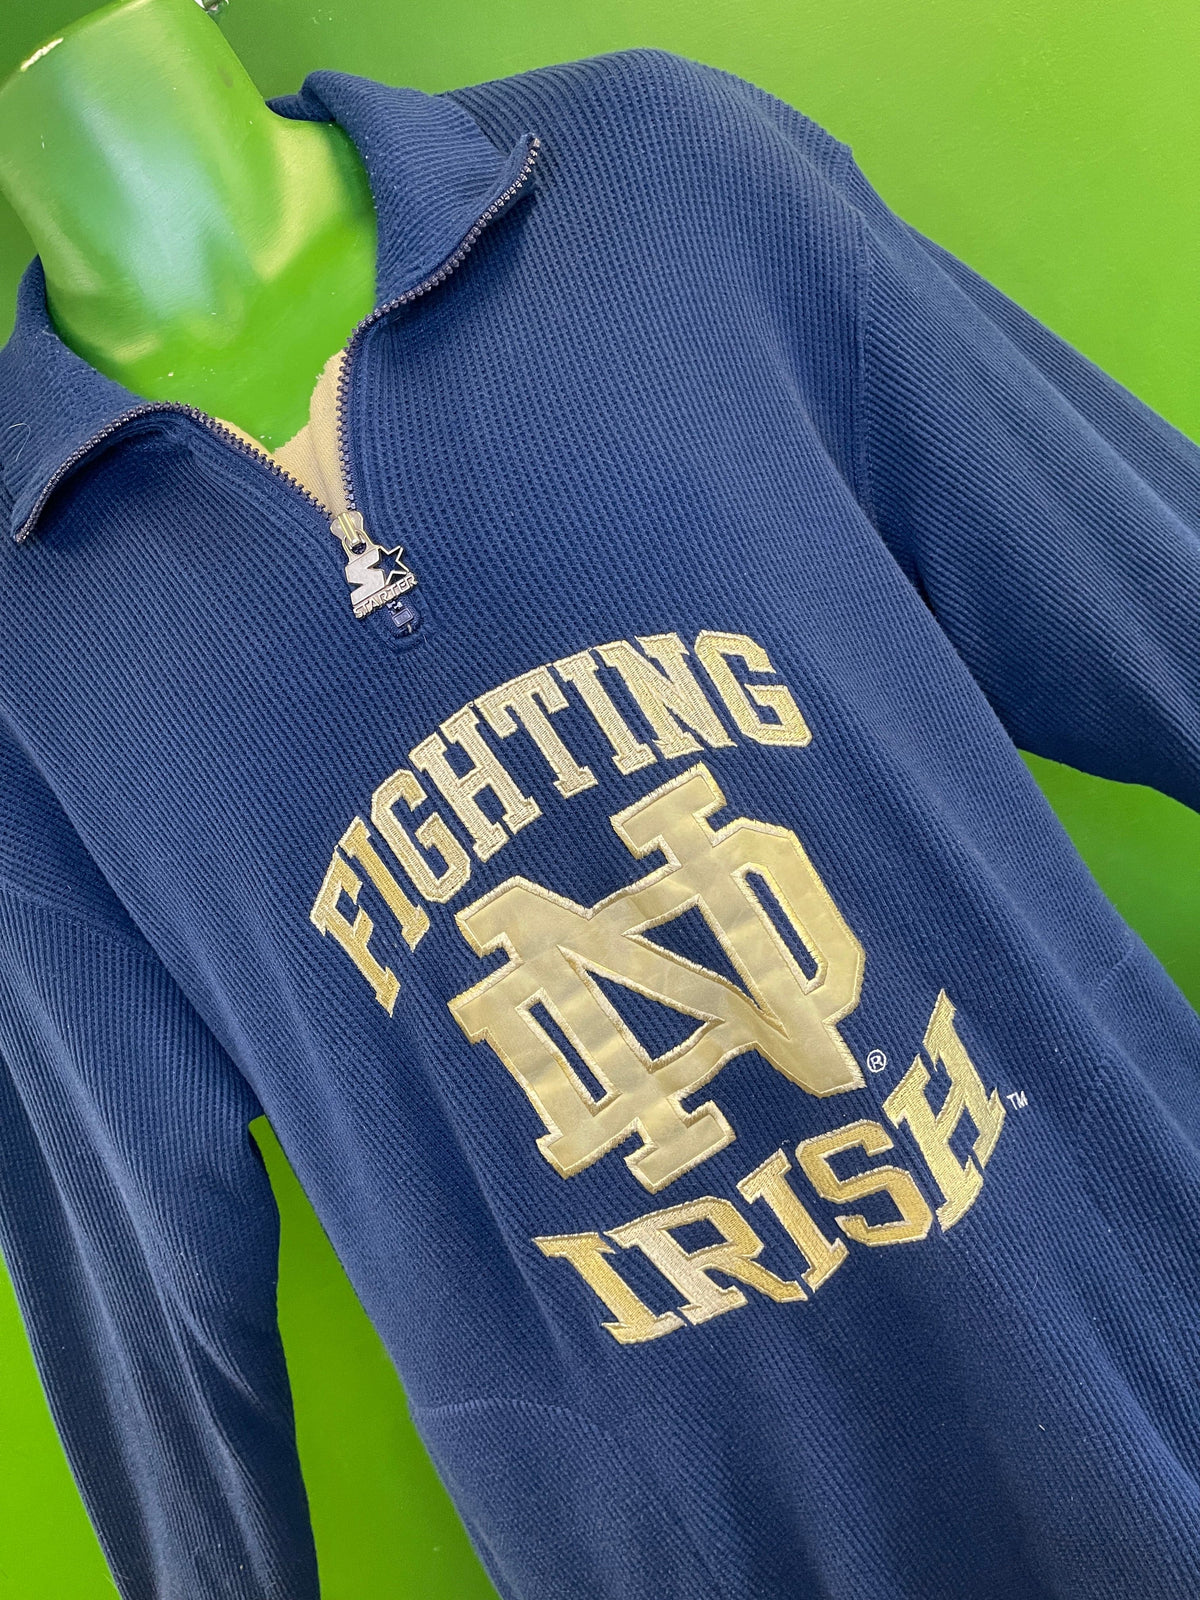 NCAA Notre Dame Fighting Irish Vintage Starter Lined Sweater/Jumper Men's Large